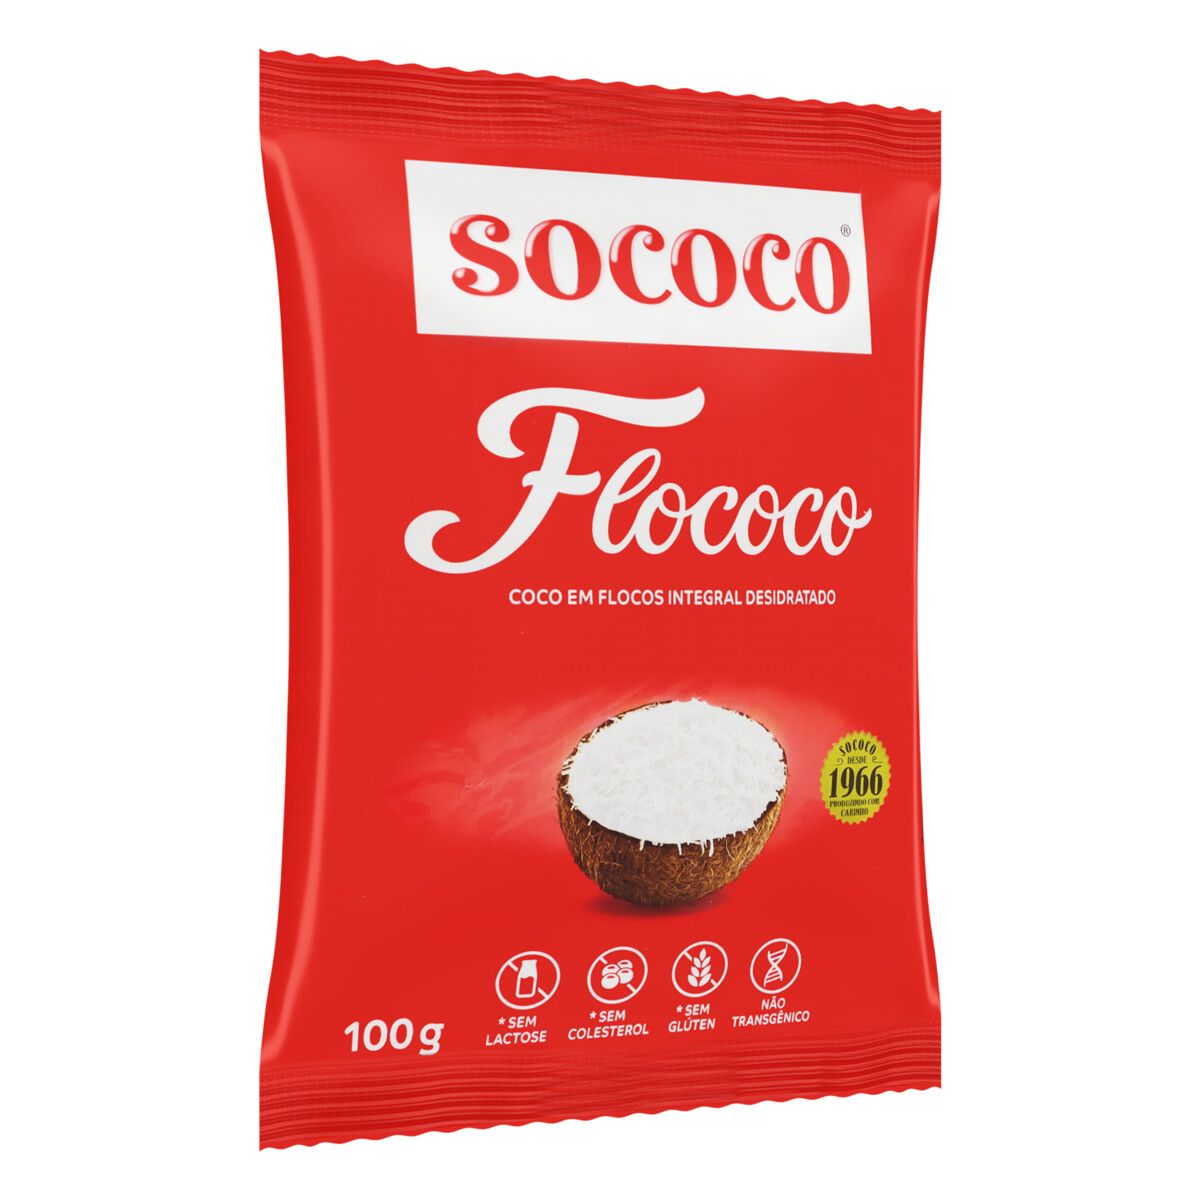 Coco Ralado Sococo Desidratado em Flocos Flococo 100g image number 3